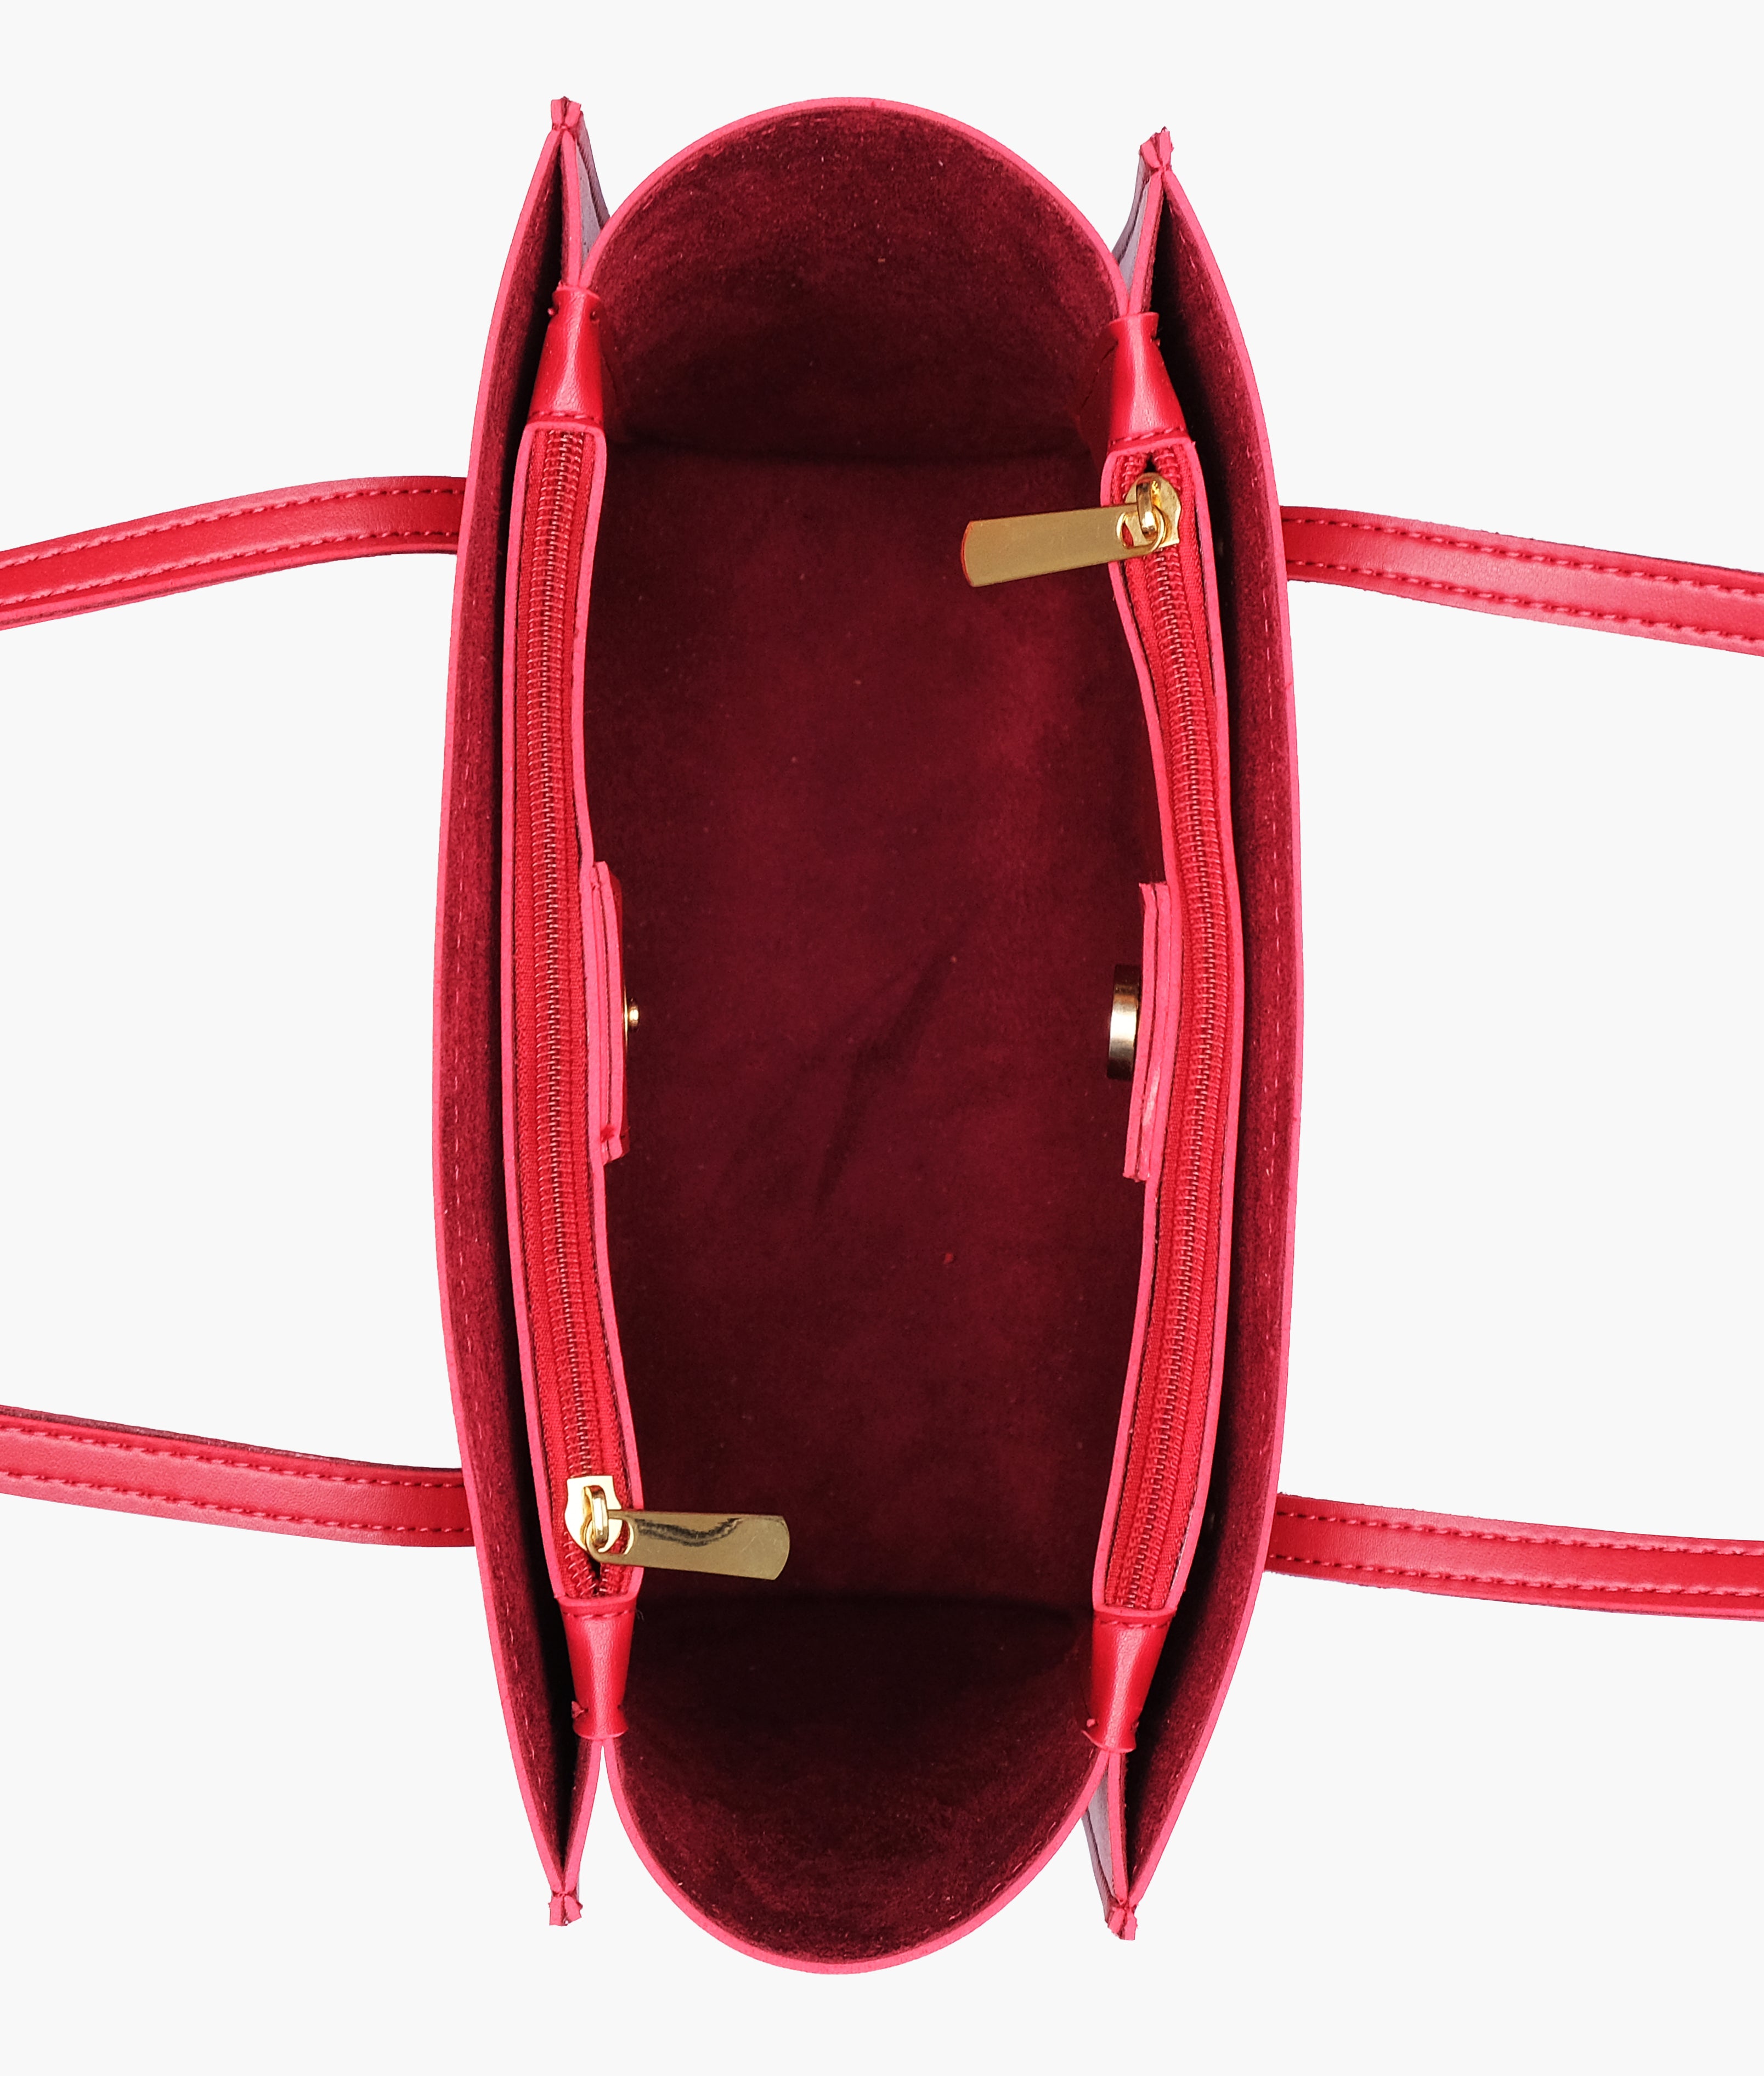 Maroon zipper shoulder bag with long handle